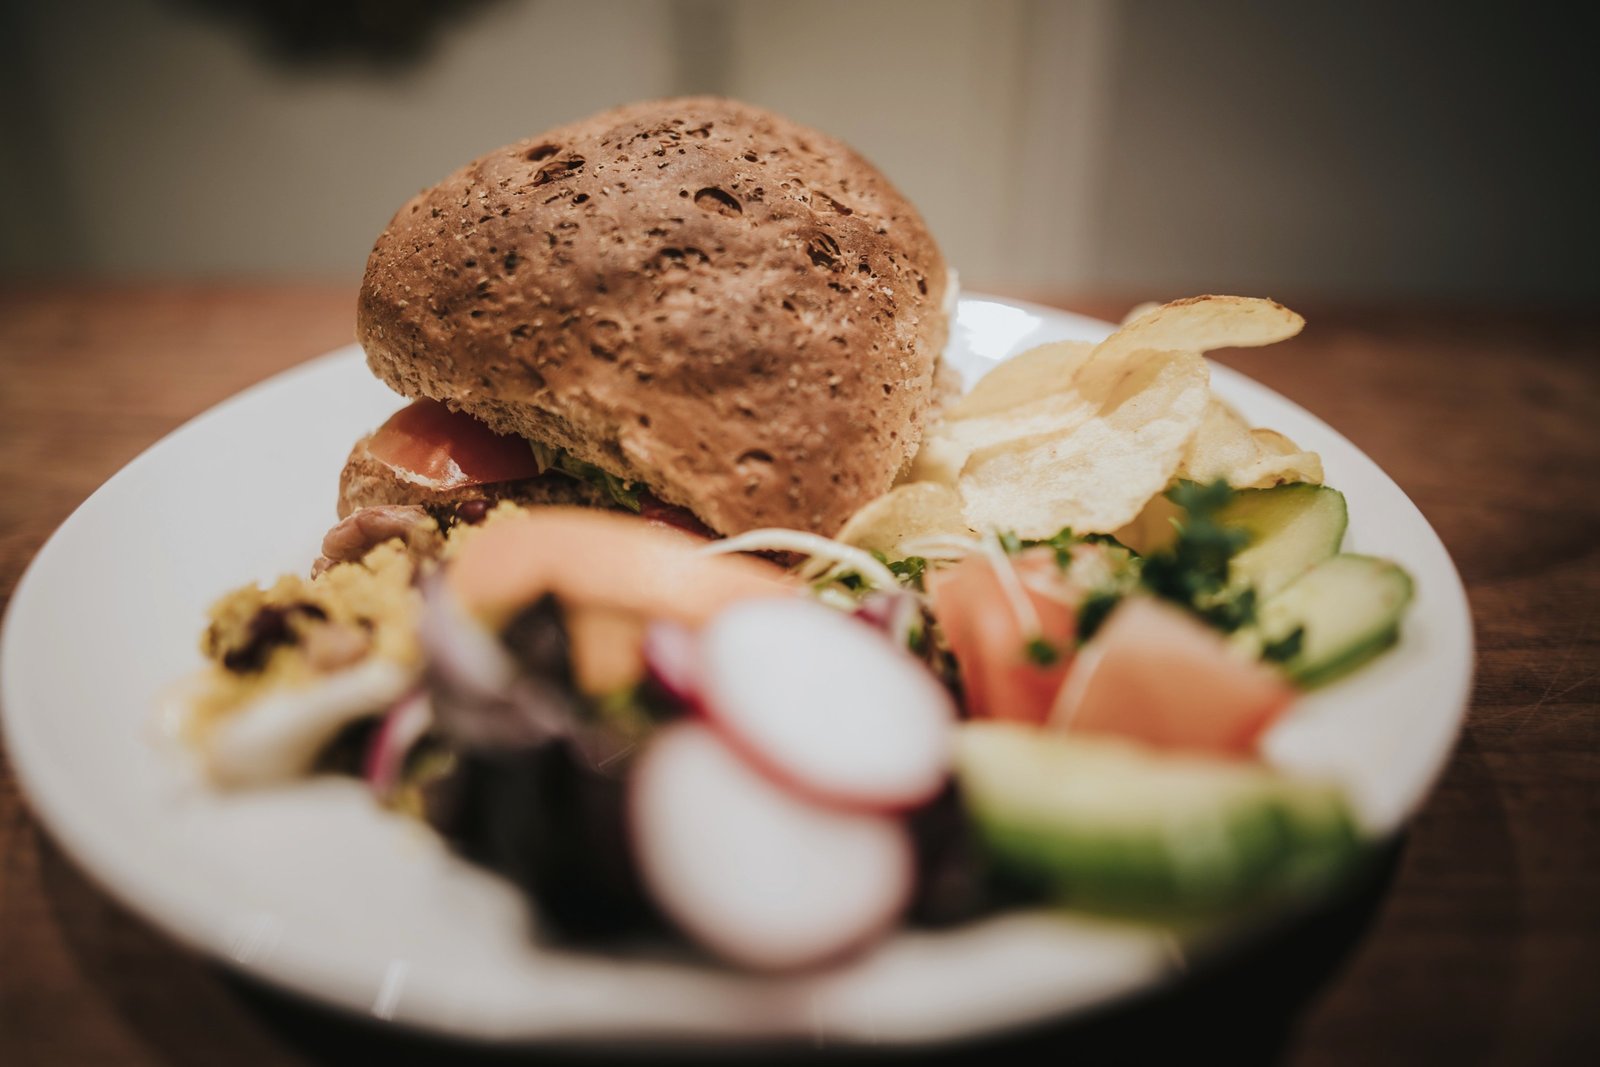 Sandwidge & Salad served at Baldry's Tearoom in Grasmere Village, The Lake District